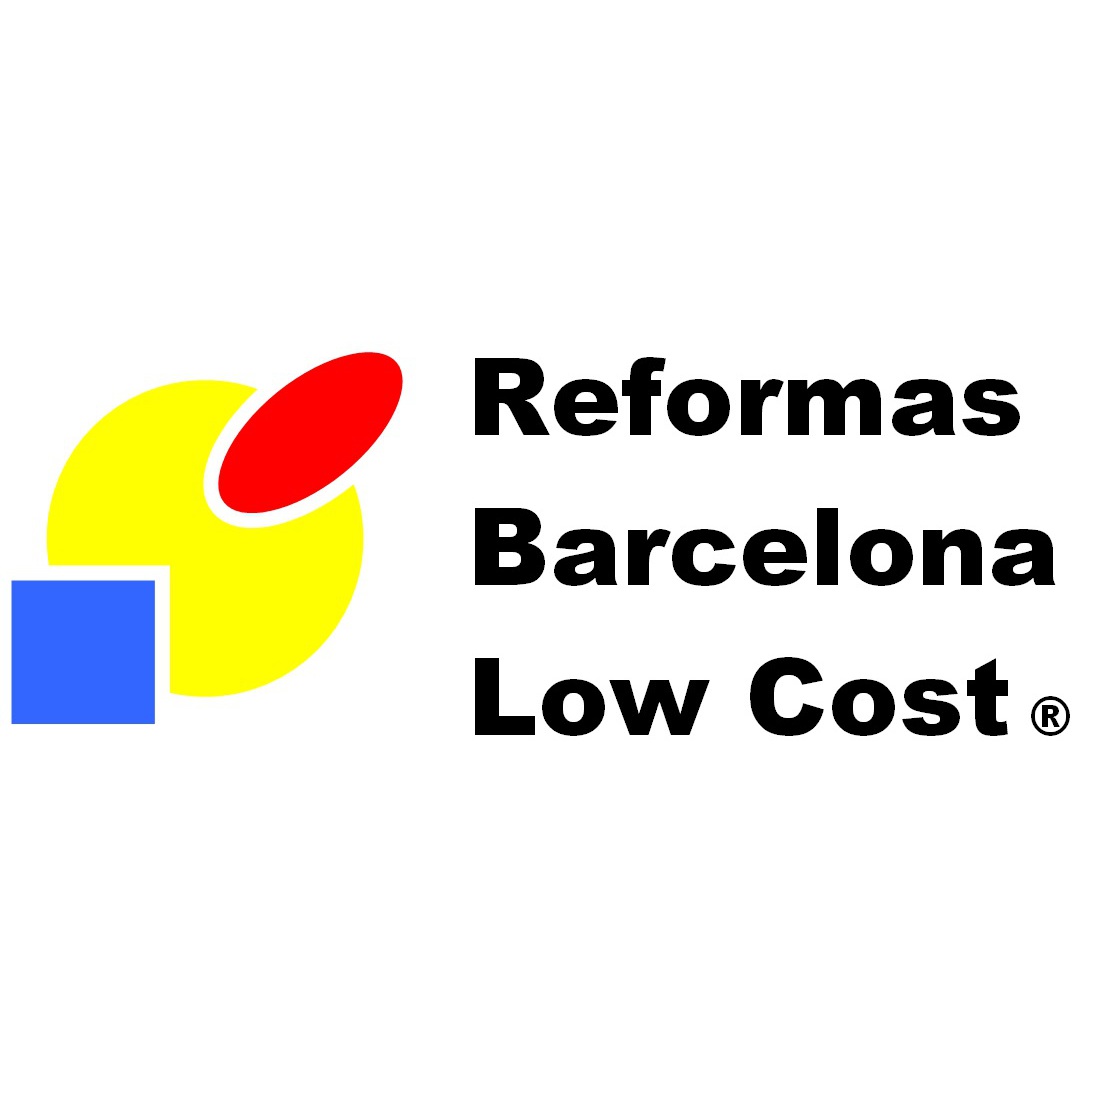 Reformas Barcelona Low Cost Logo